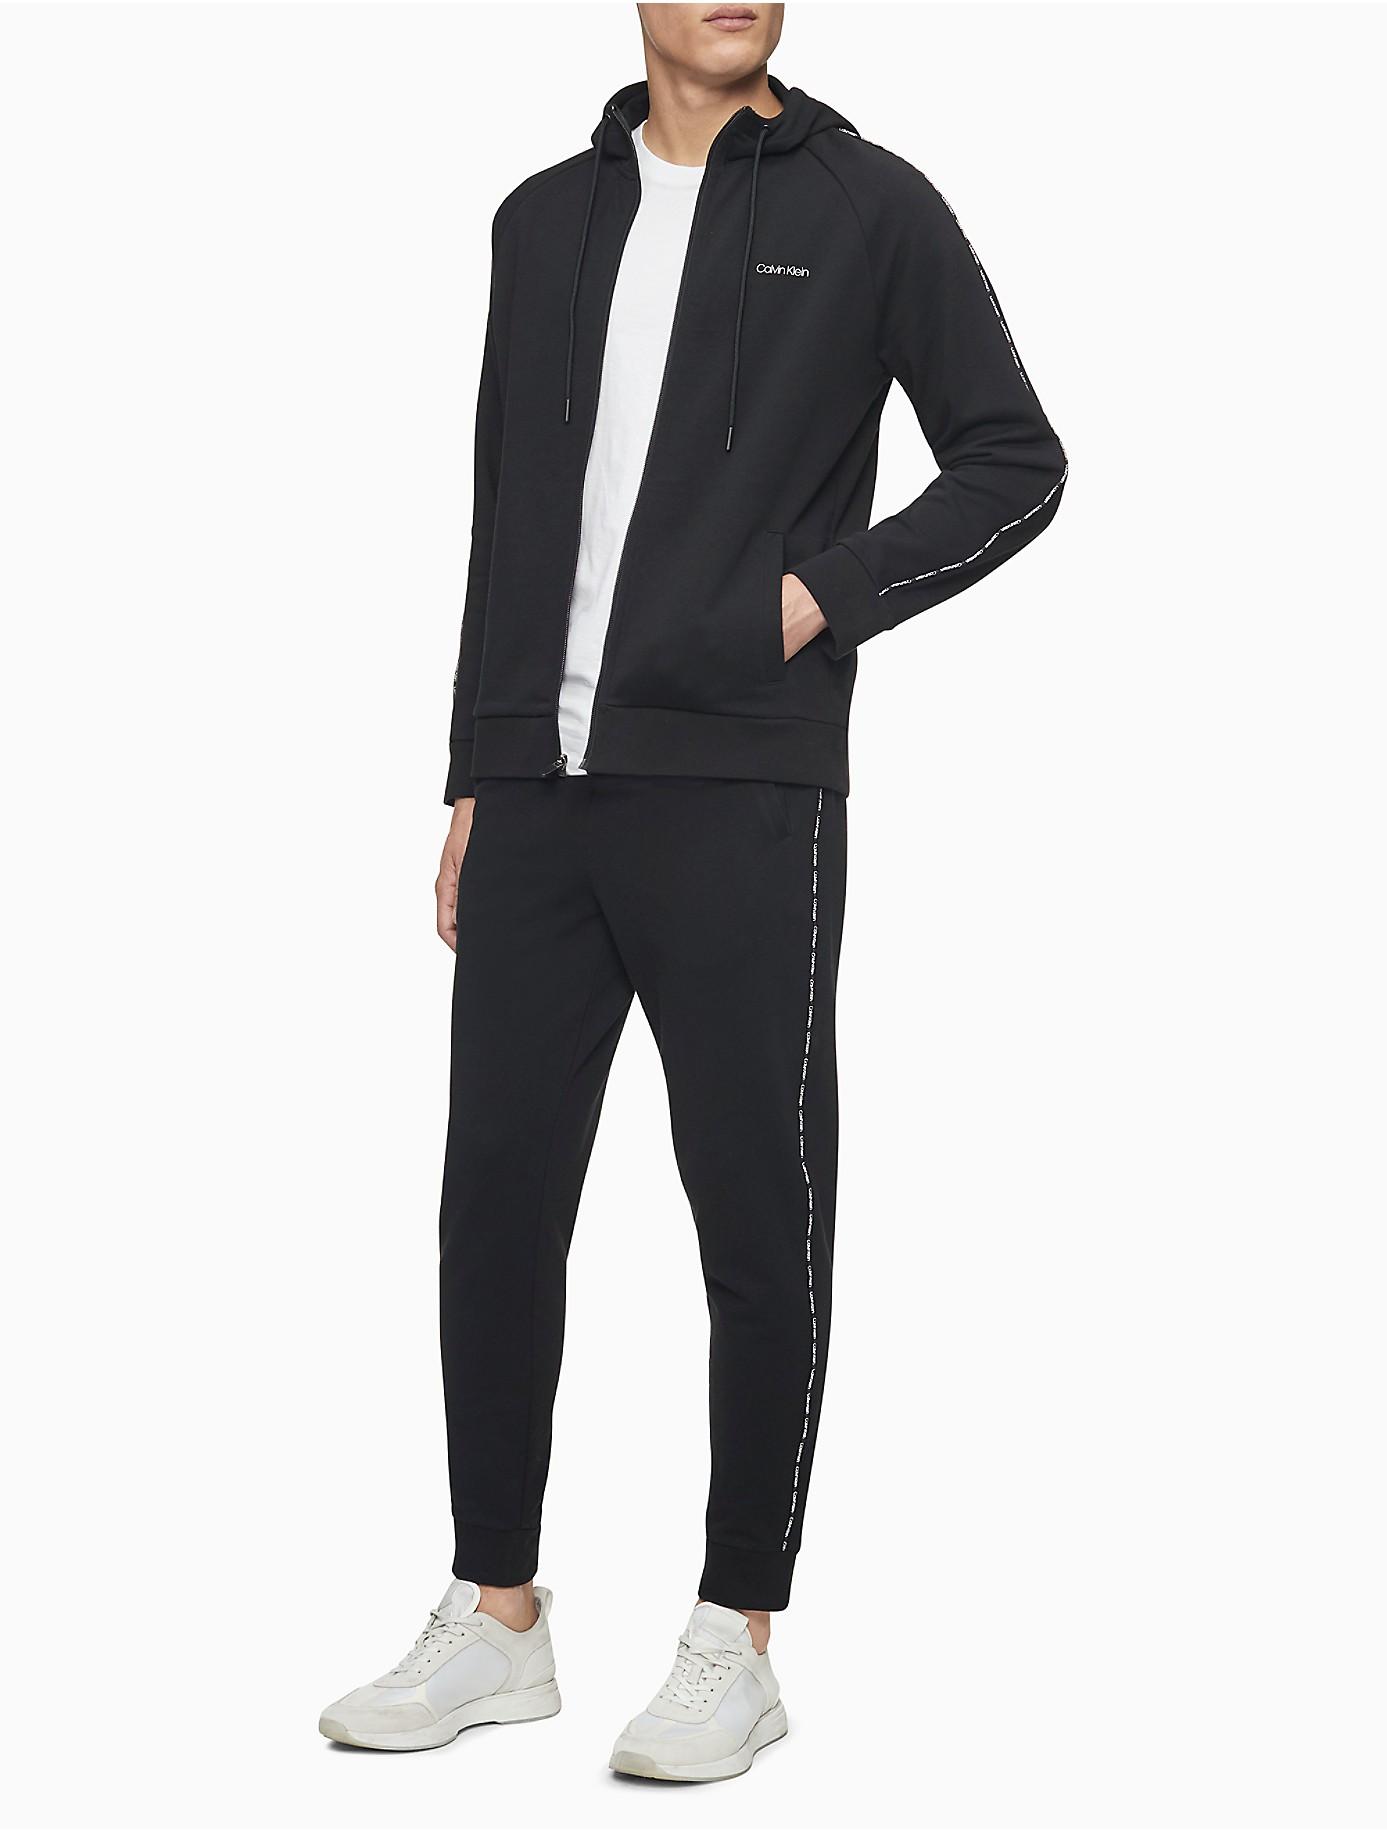 Calvin Klein Cotton Logo Tape Piping Full Zip Hoodie in Black for Men - Lyst